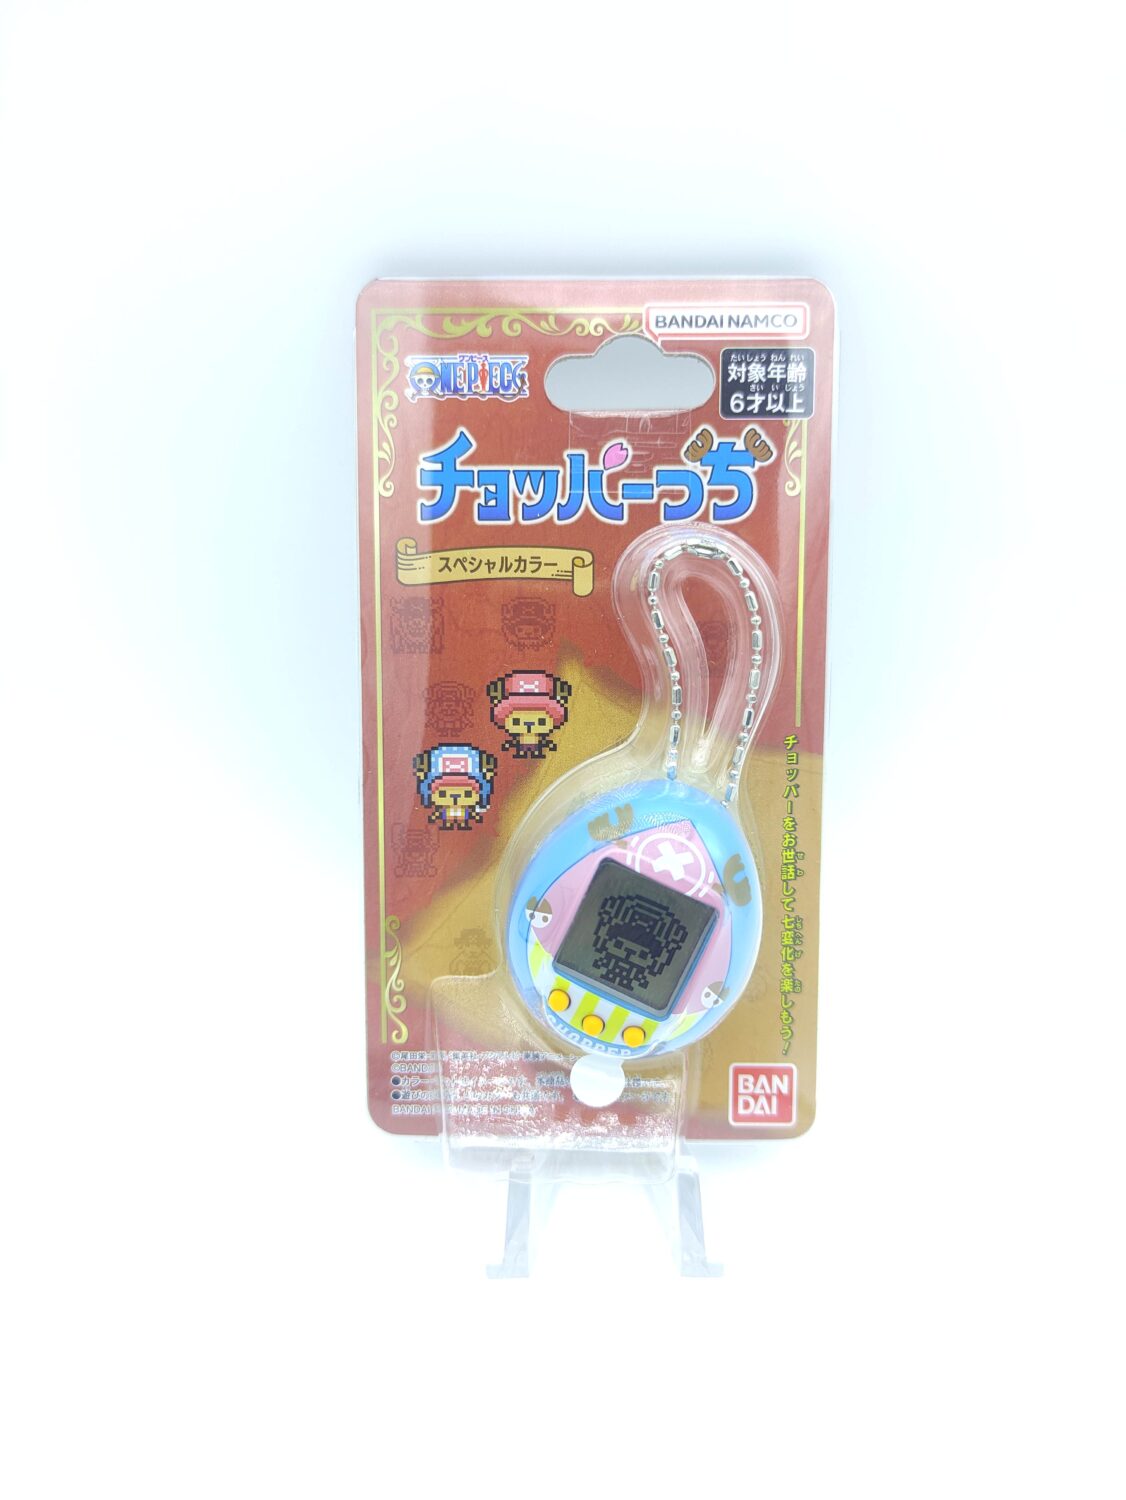 Tamagotchi Bandai Nano One Piece Chopper Special Color Toy Buy-Tamagotchis 2